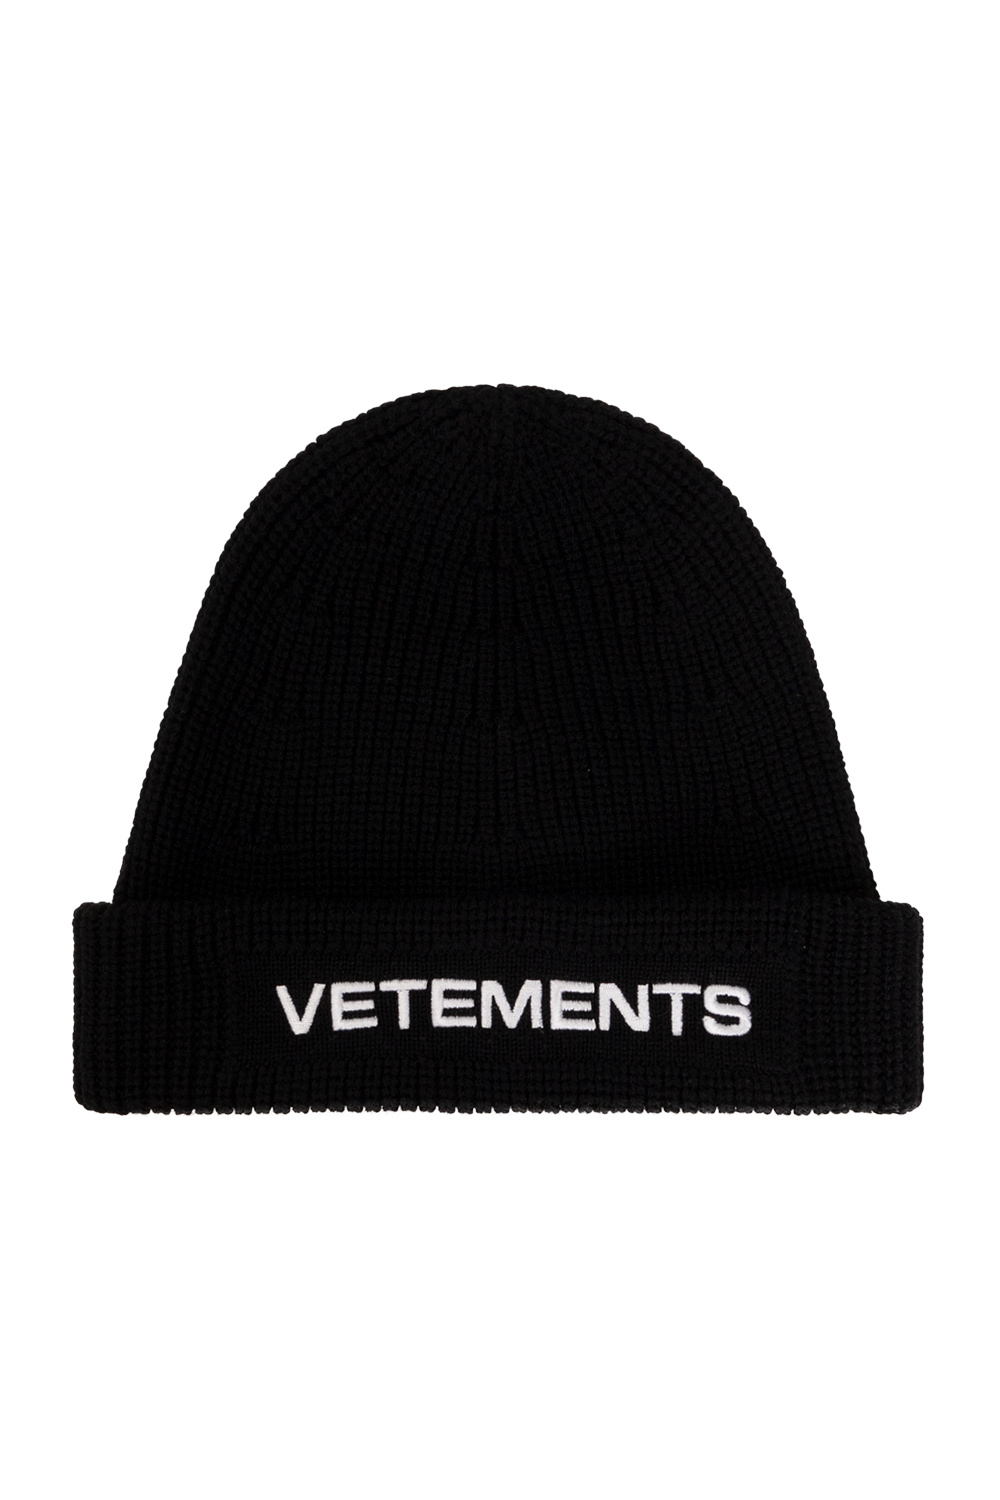 StclaircomoShops | a woven hat | | VETEMENTS Beanie Men\'s Accessorie logo with